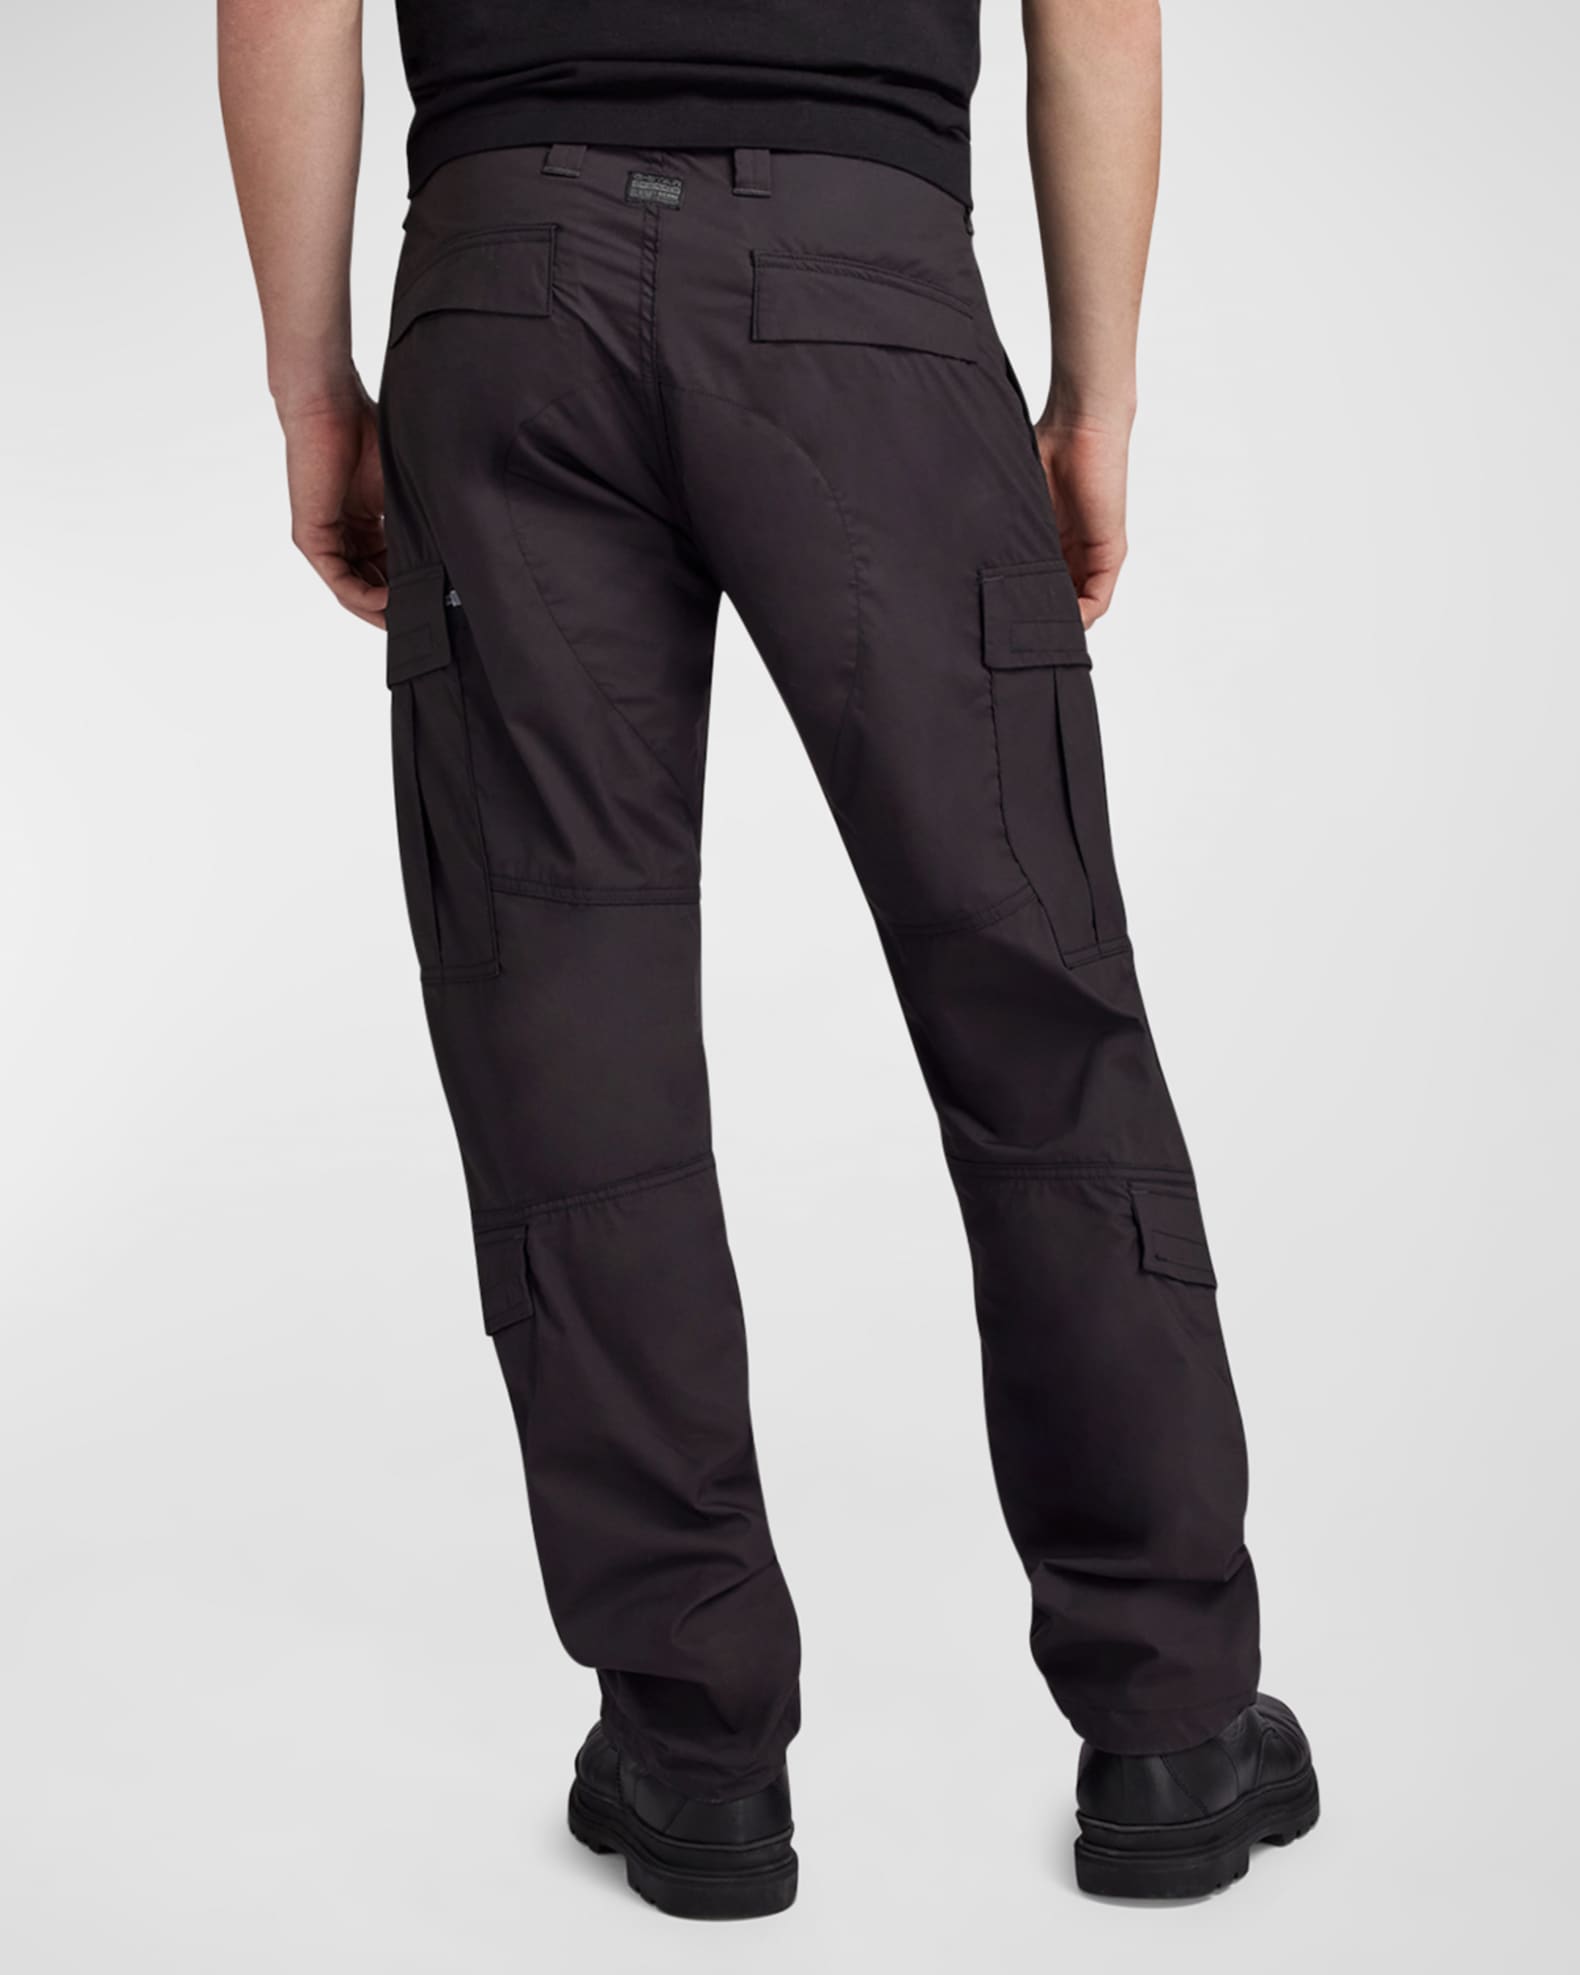 G-STAR RAW Men's P-3 Cargo Trainer Pants | Neiman Marcus